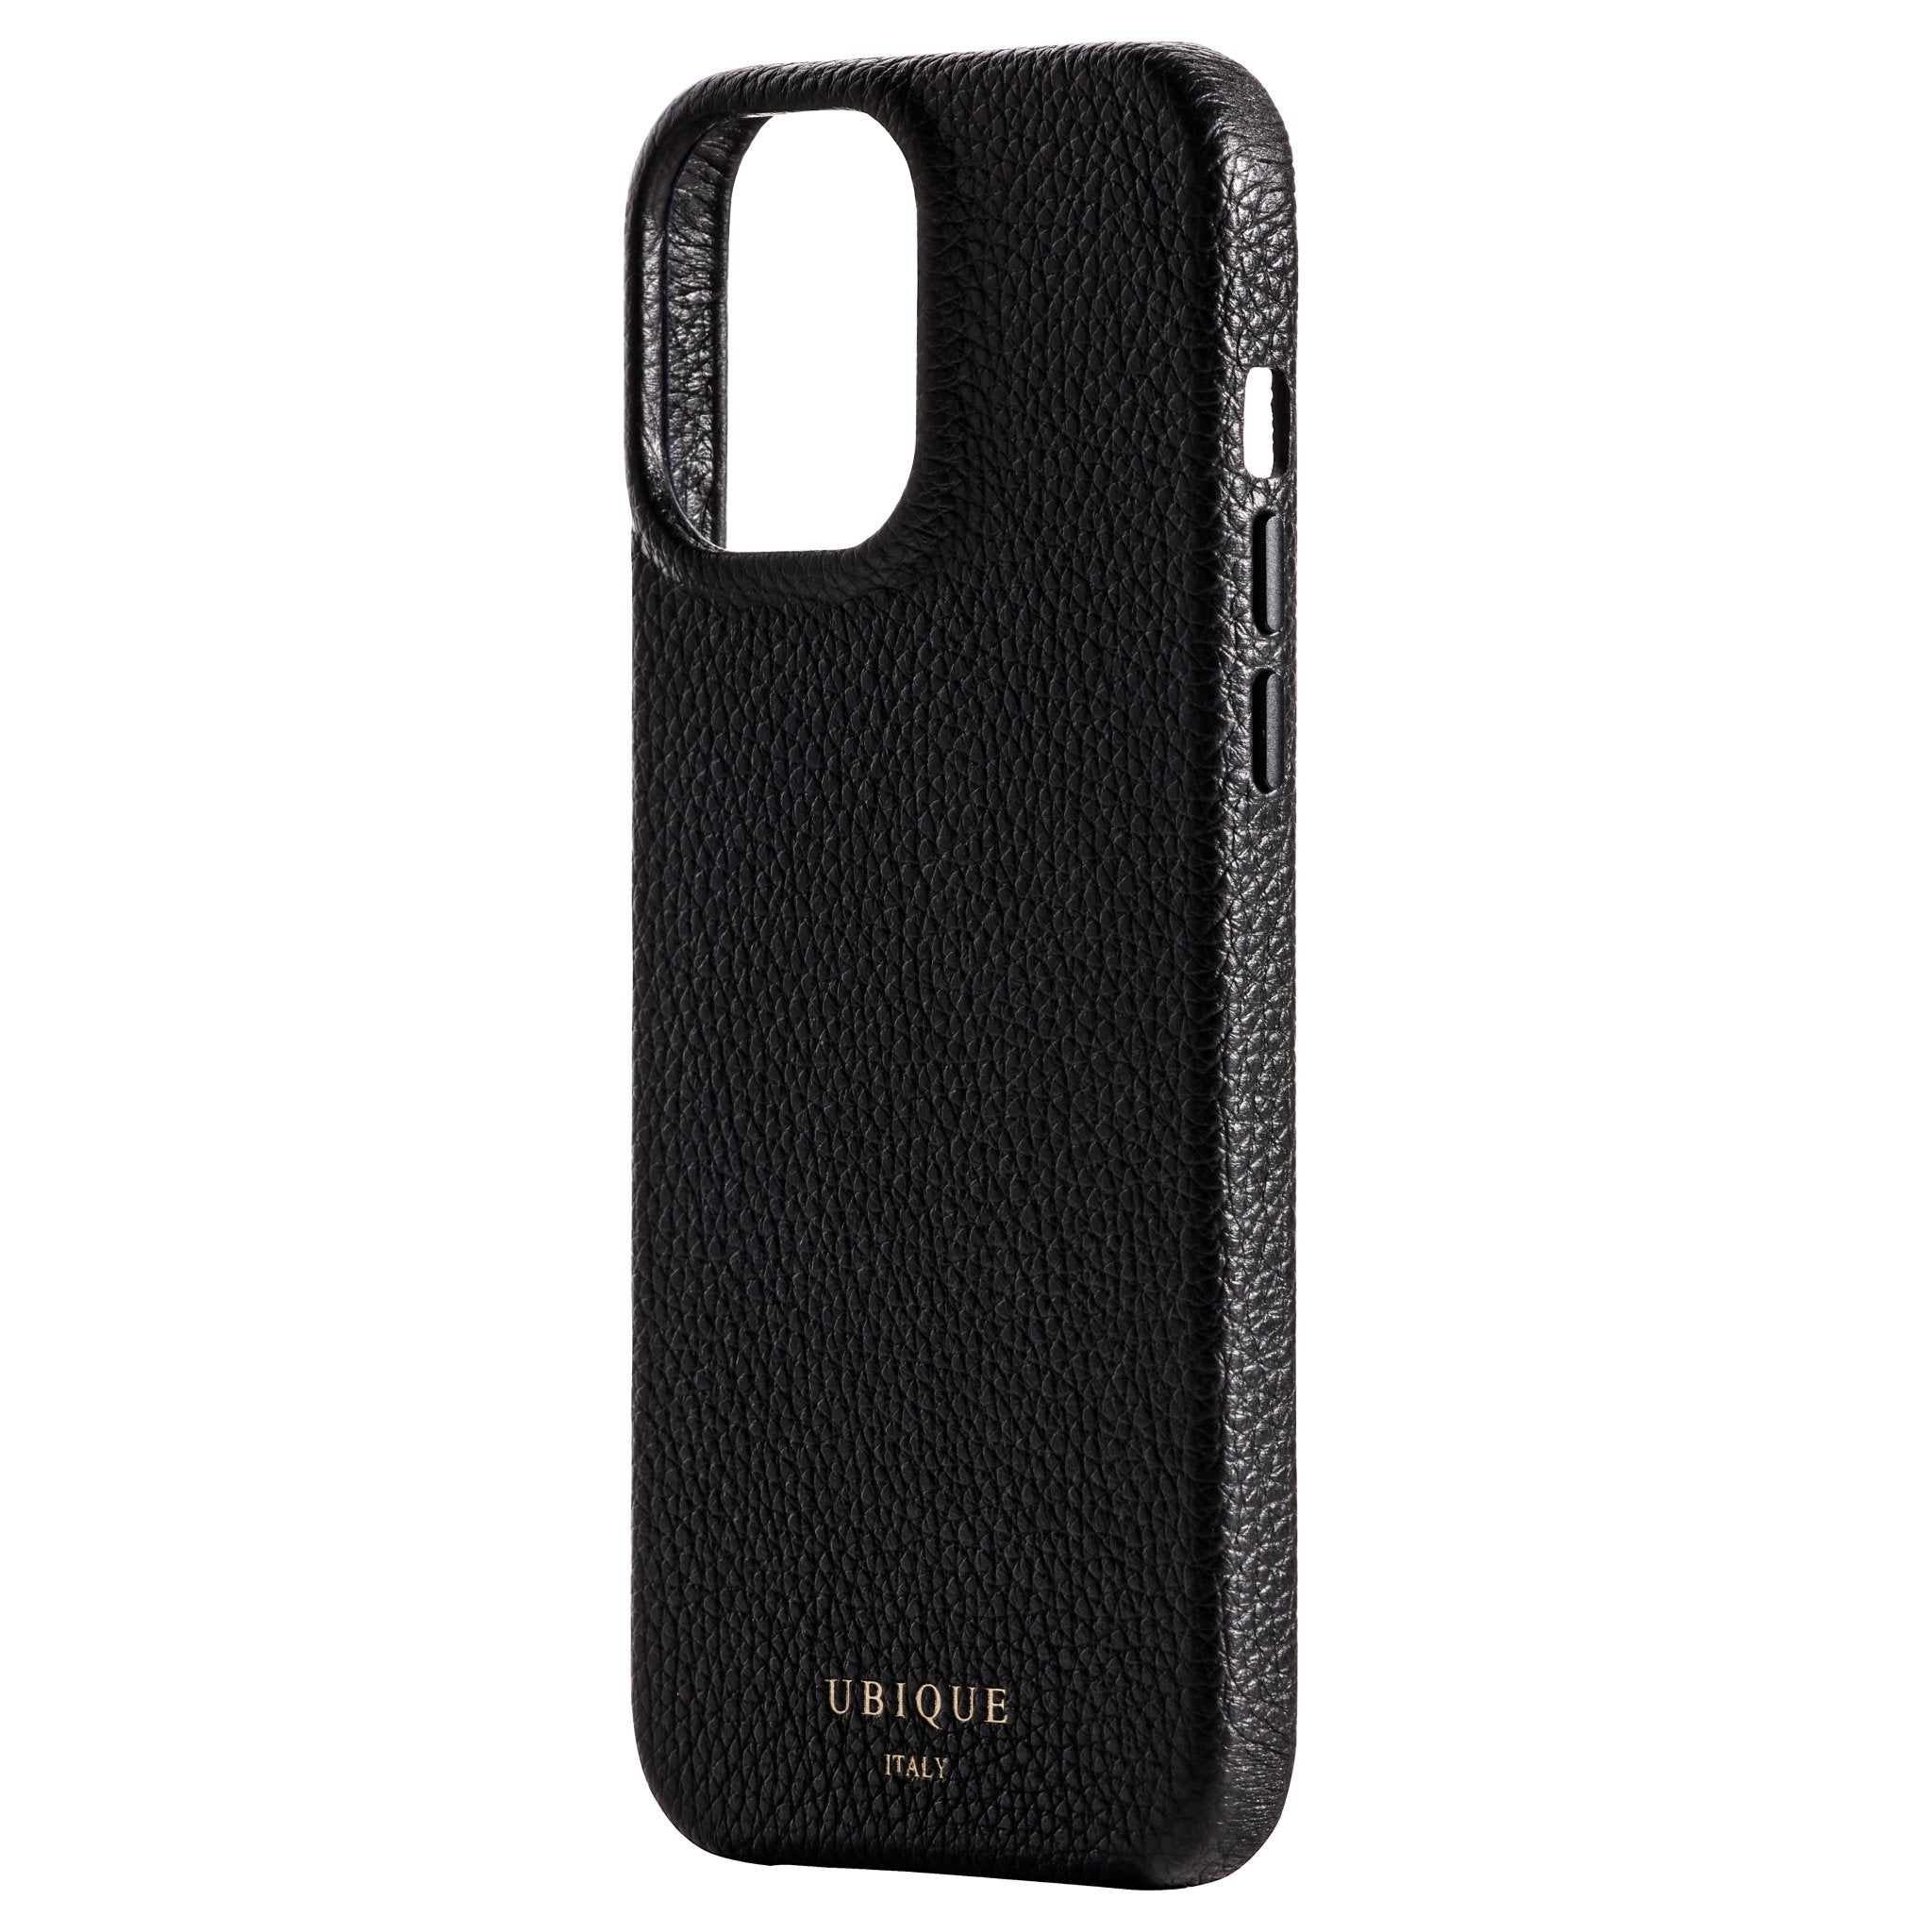 Ubique Italy Luxury iPhone Case 13 Pro Max Pebble Grain Leather Black Angled